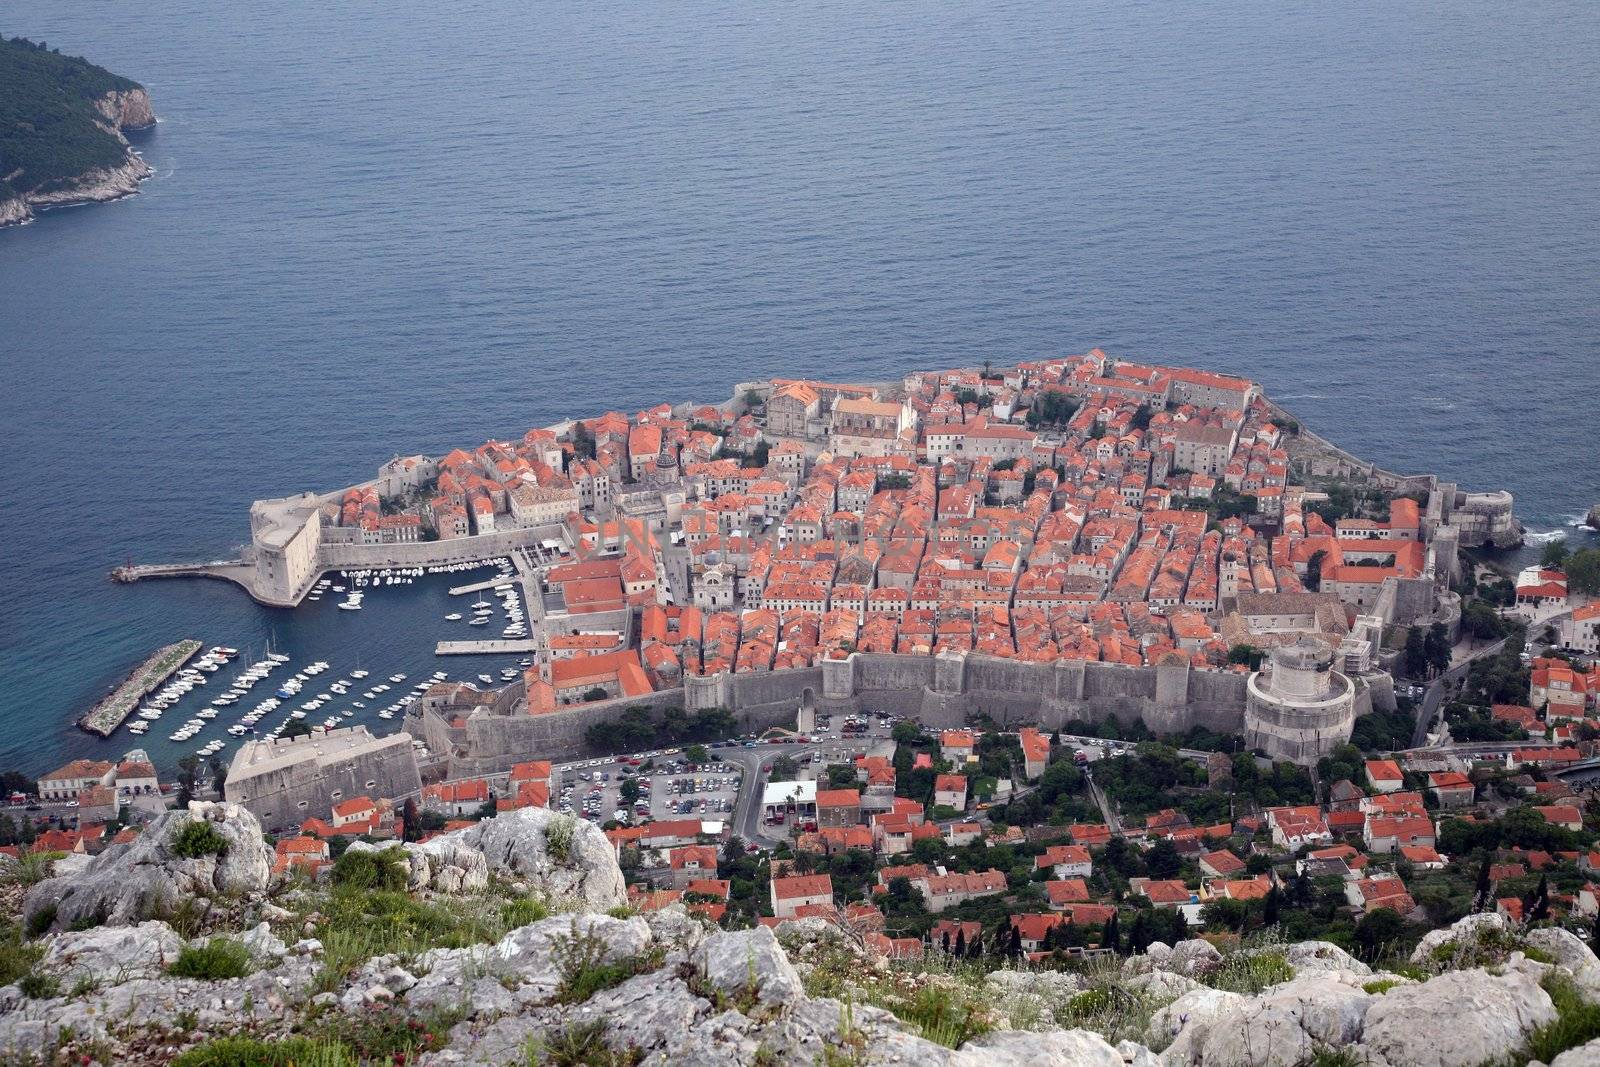 Dubrovnik, Croatia. Most popular travel destination in Adriatic sea.